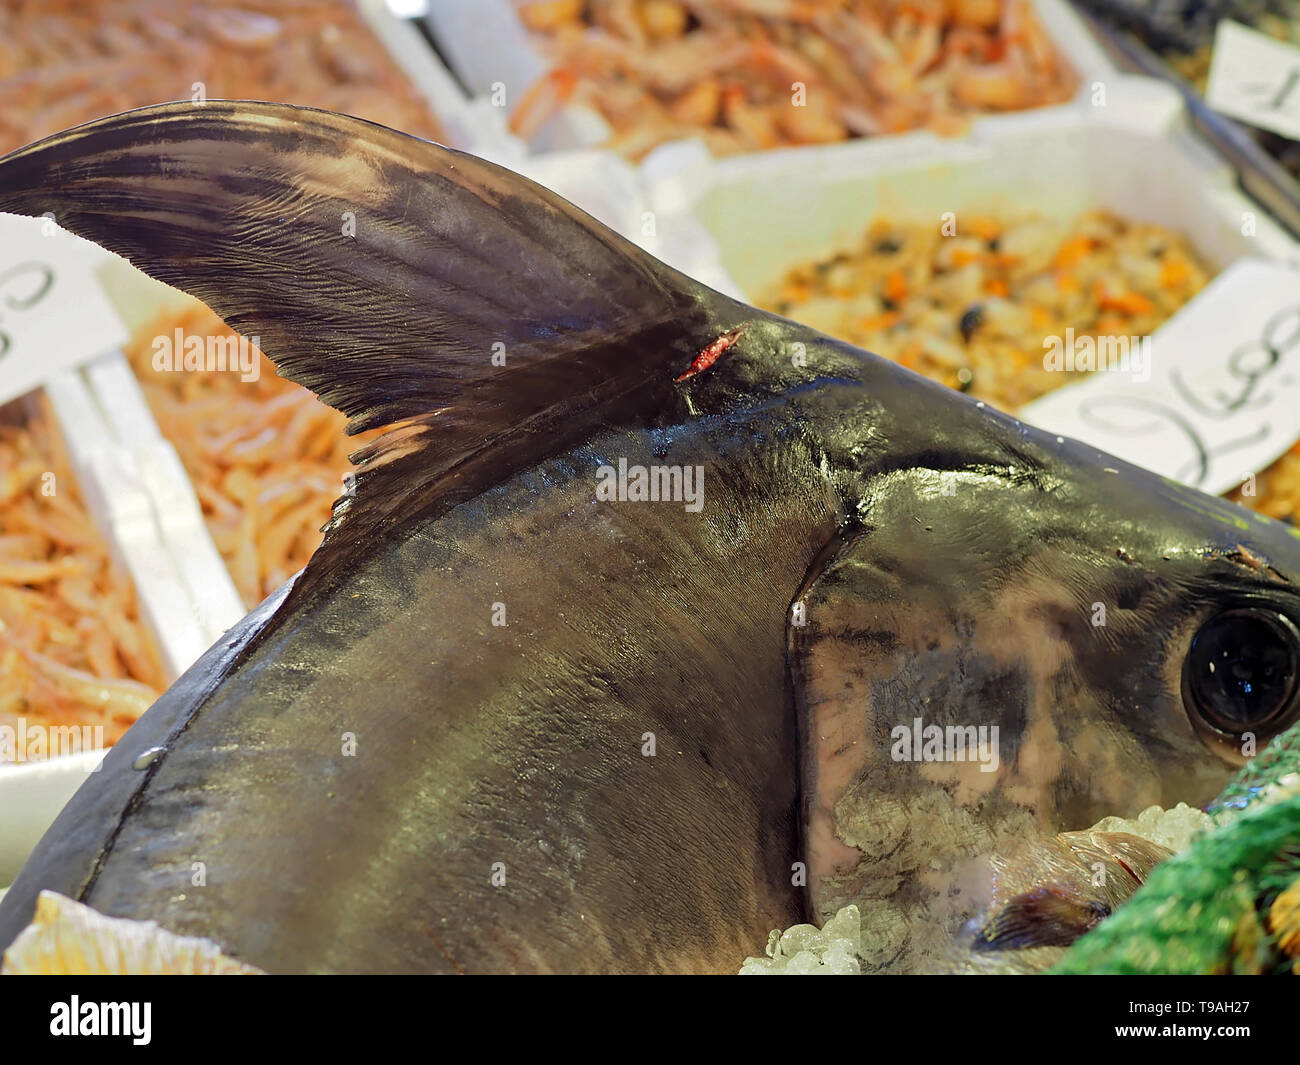 Big swordfish at a food market Stock Photo